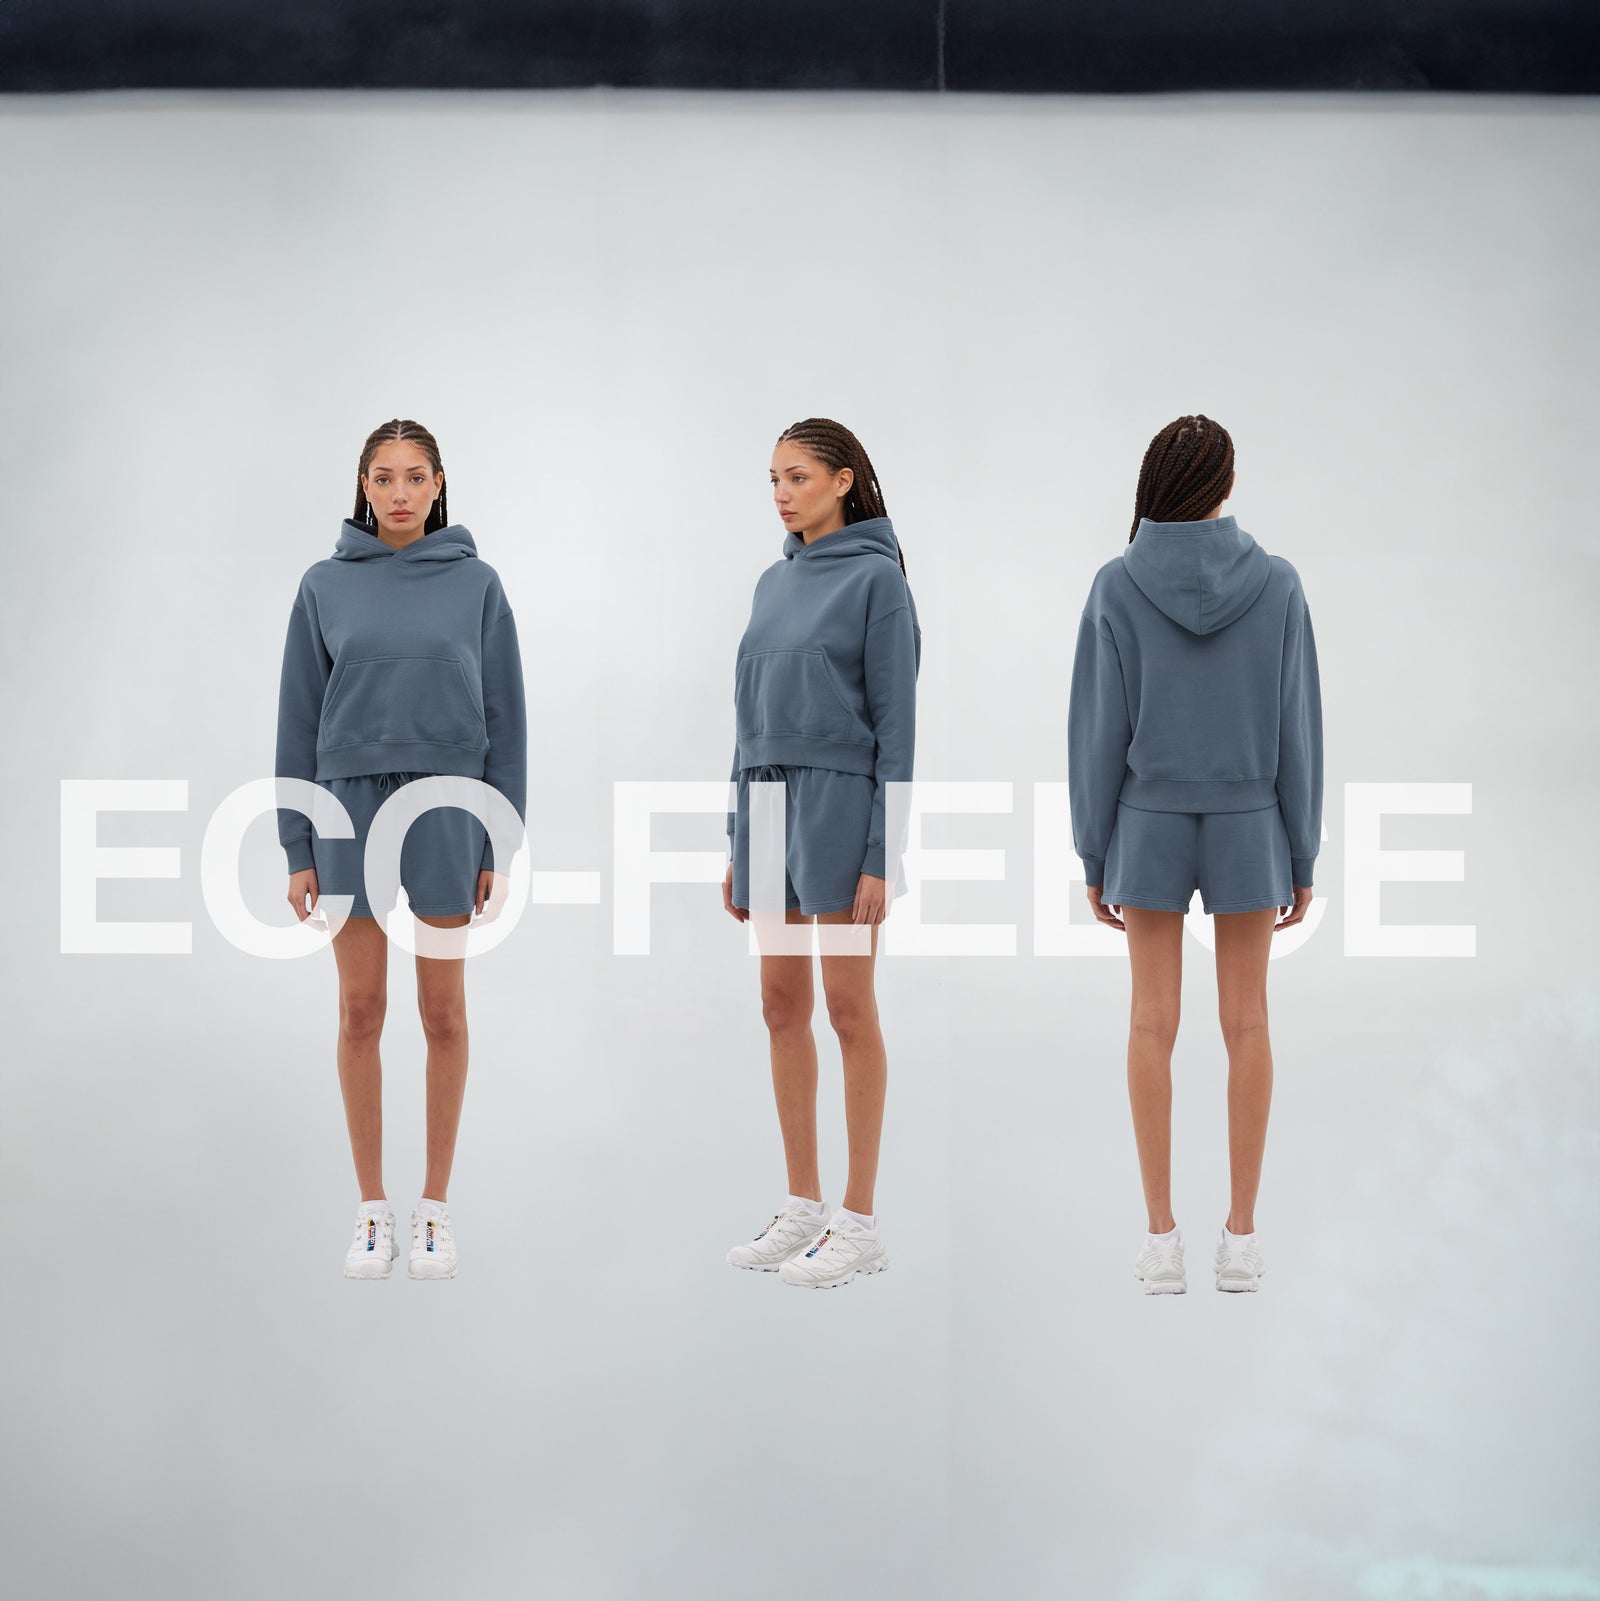 Studio Collection - Women's Eco-Fleece - Bench